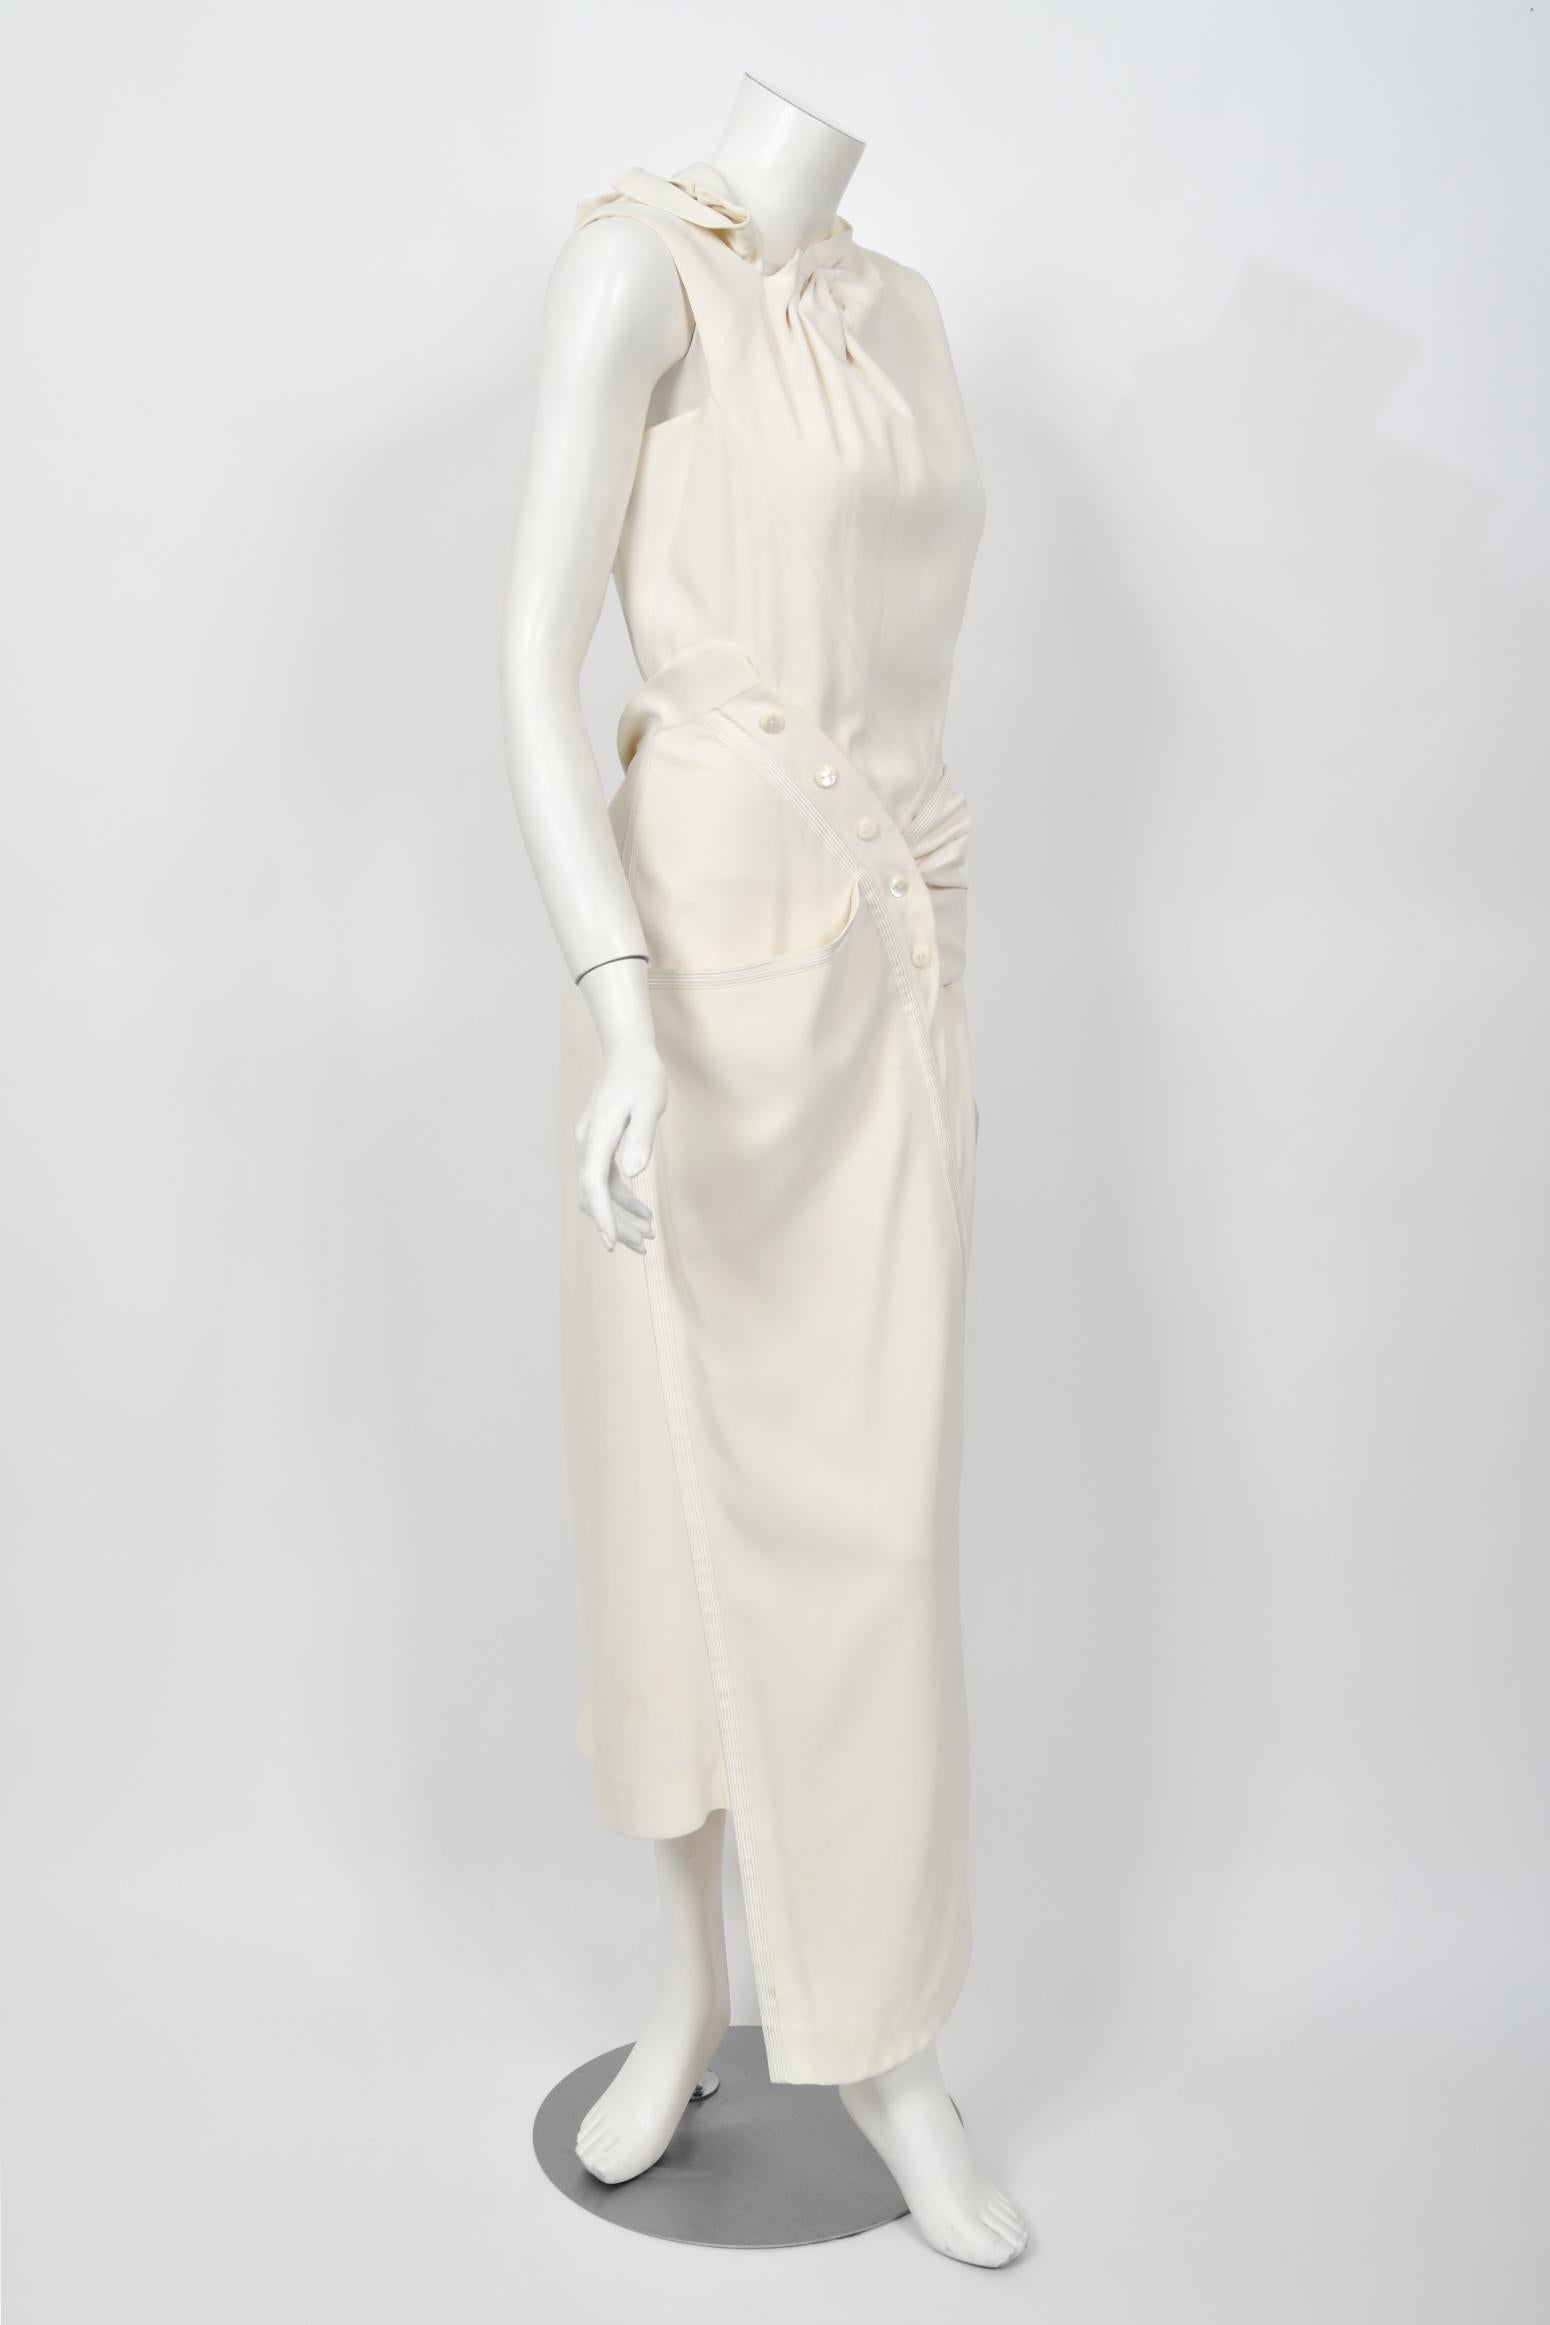 2000 Christian Dior by John Galliano Ivory Crepe Cut-Out Asymmetric Draped Dress 6